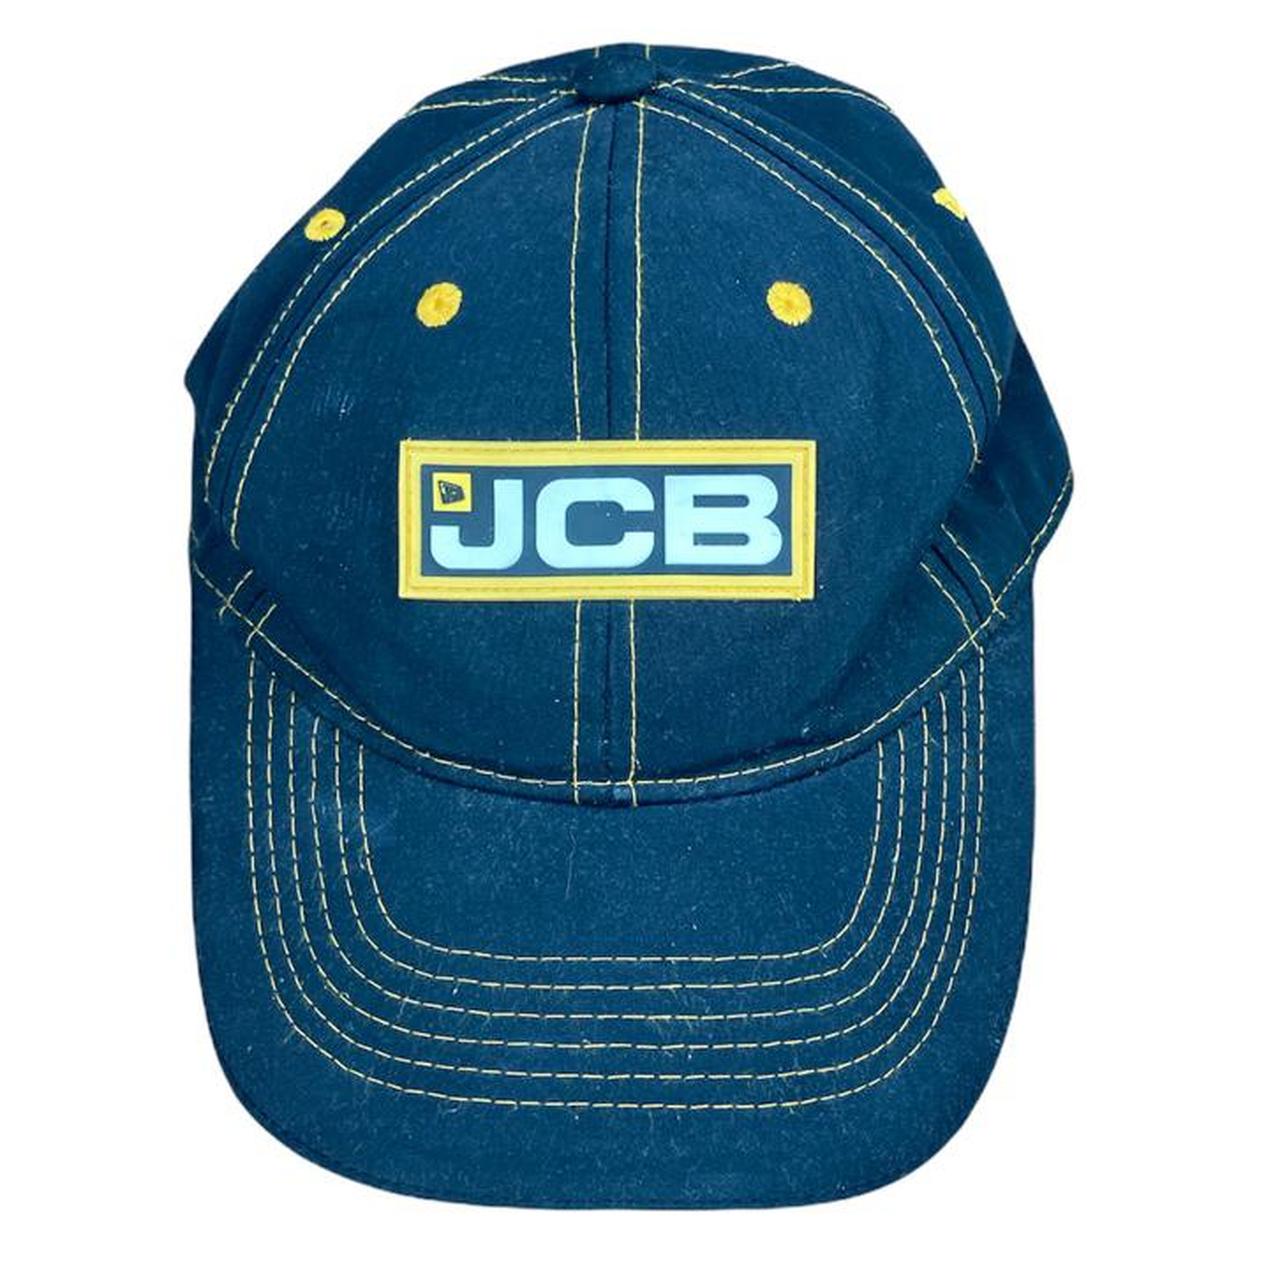 JCB BLUE HAT